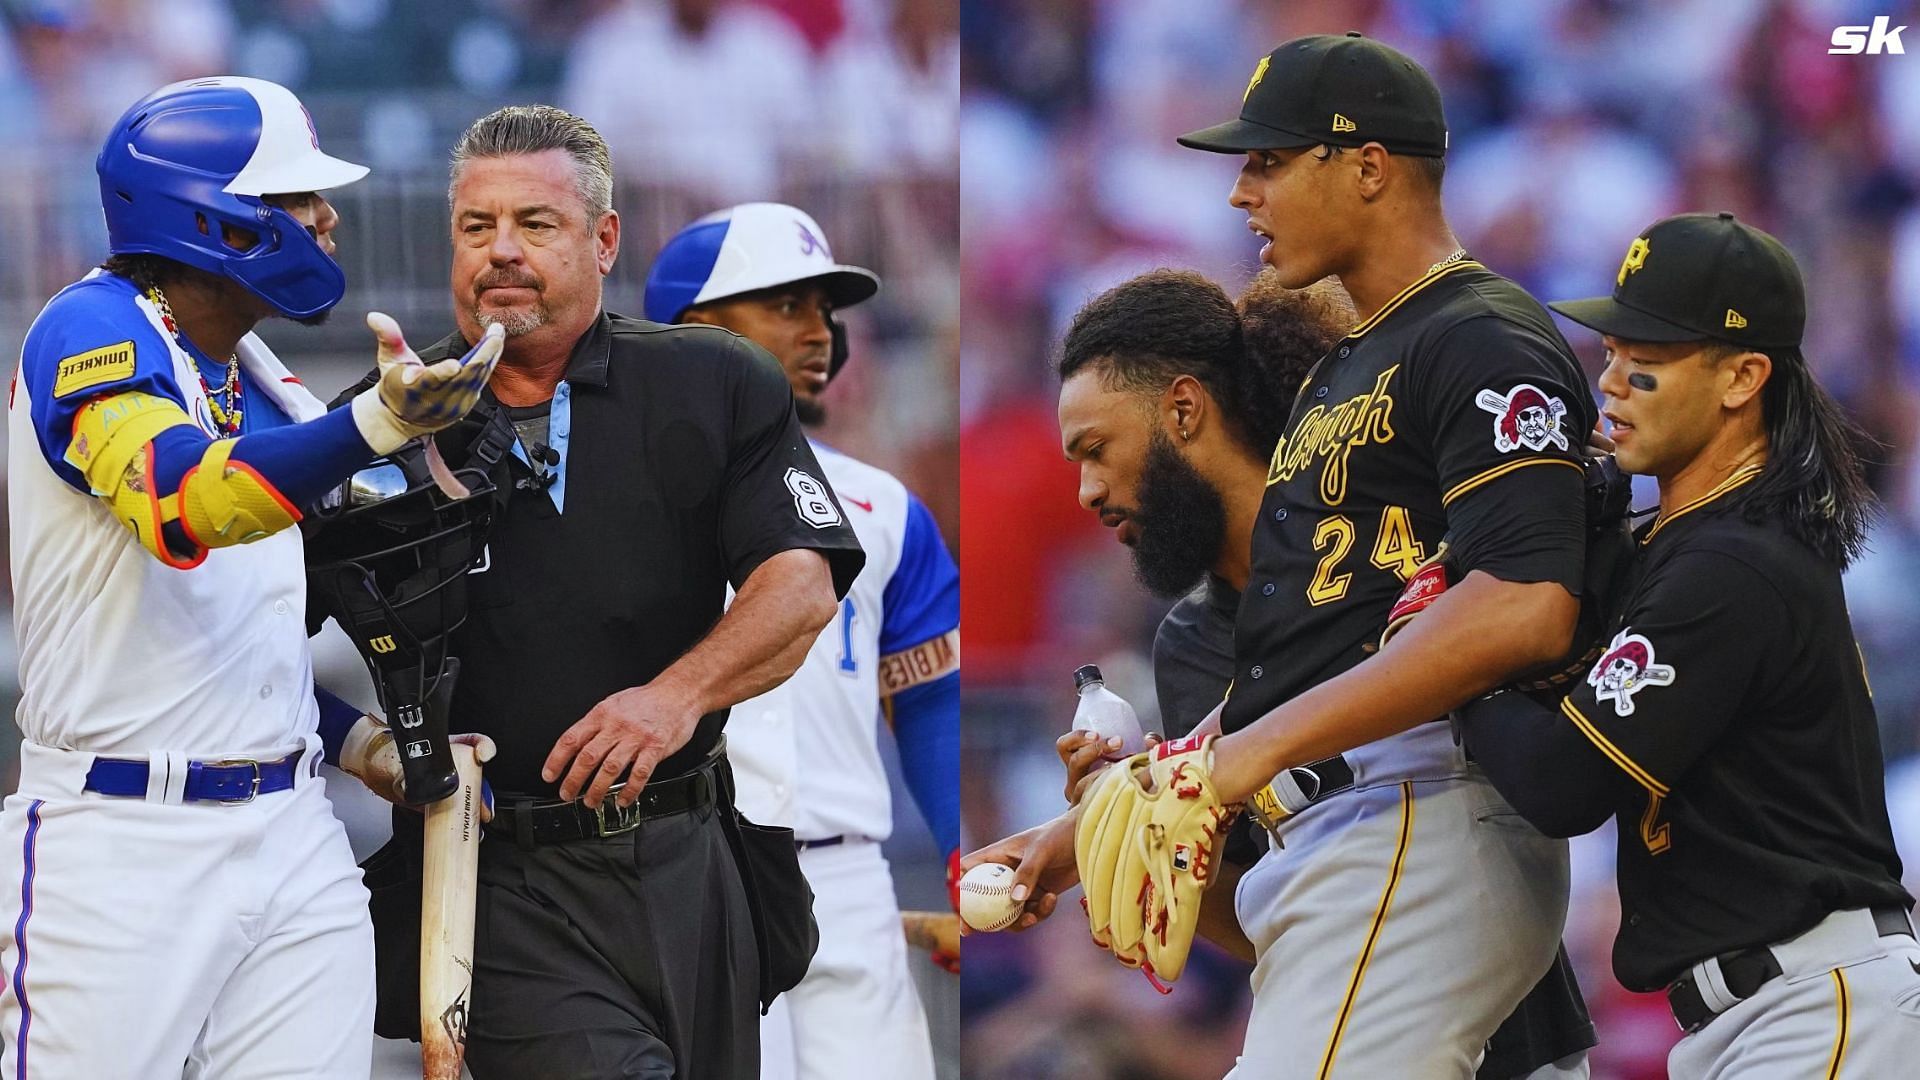 Baseball has become a little bit soft': Johan Oviedo fires back at Braves'  Ronald Acuna Jr. after emotional exchange